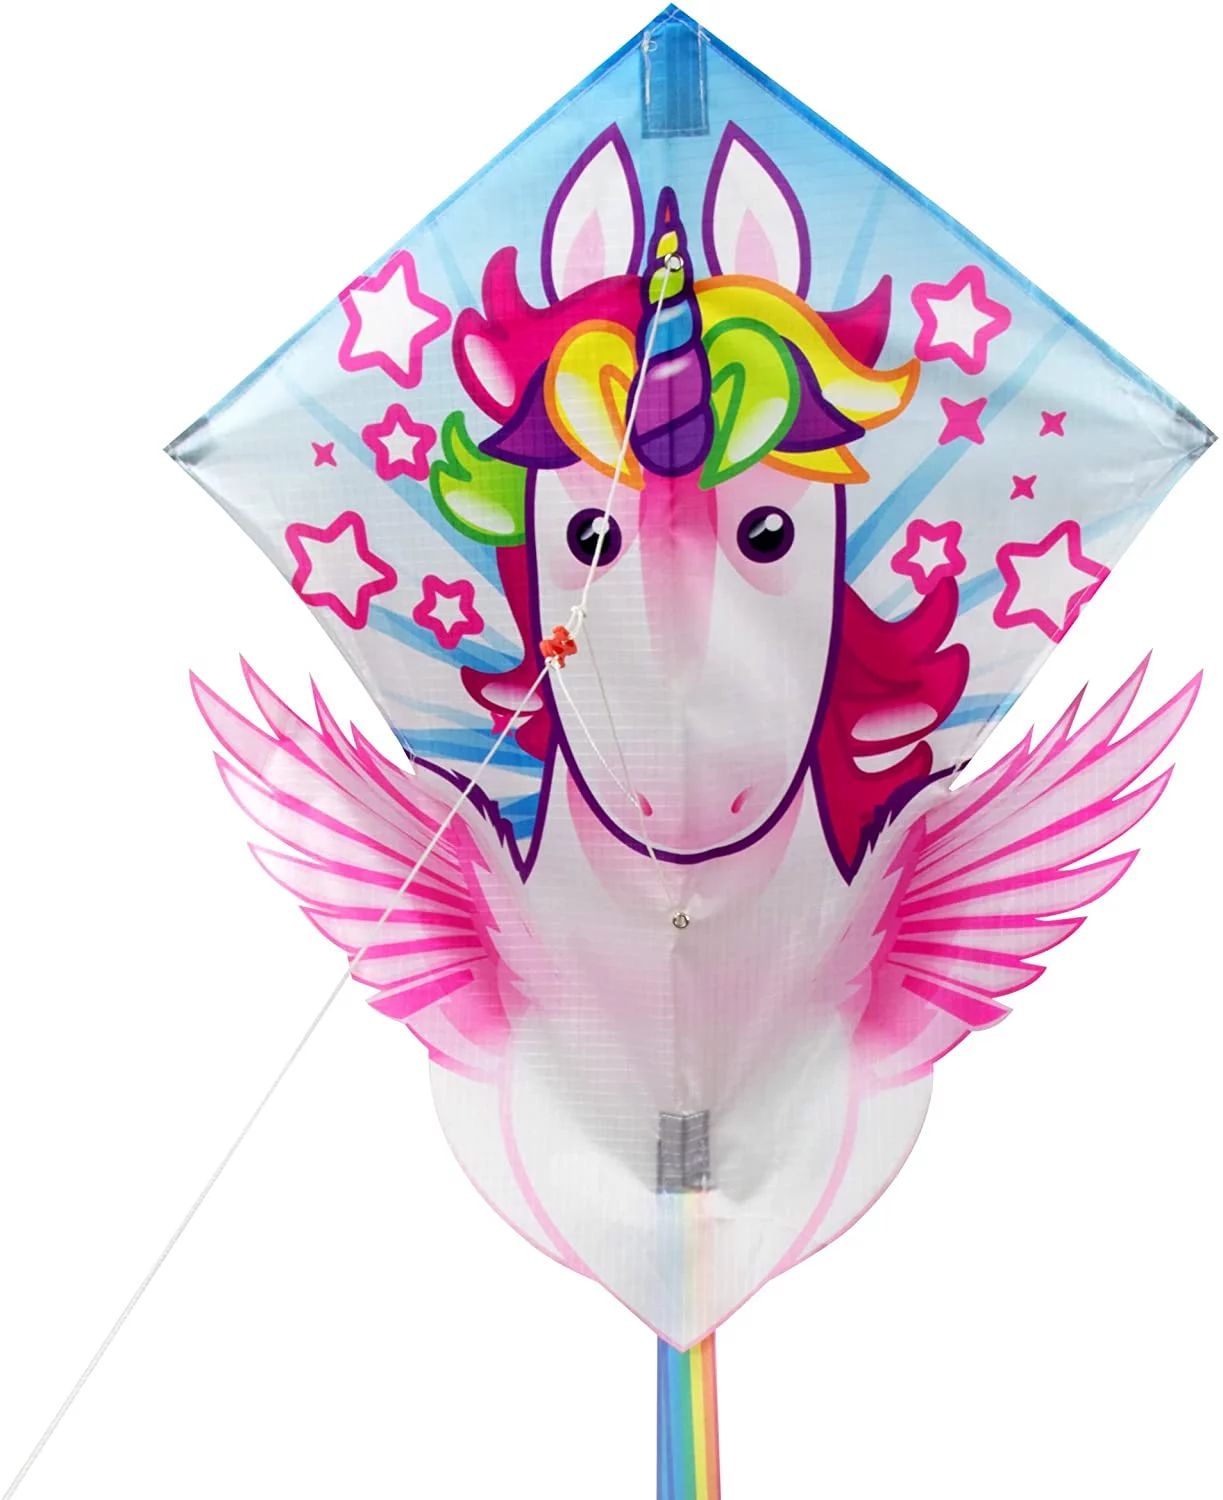 Eolo Ready 2 Fly Kids’ Pop-Up Diamond Shape Kite, Unicorn, 22” Wingspan. Ages 4 and up. | Walmart (US)